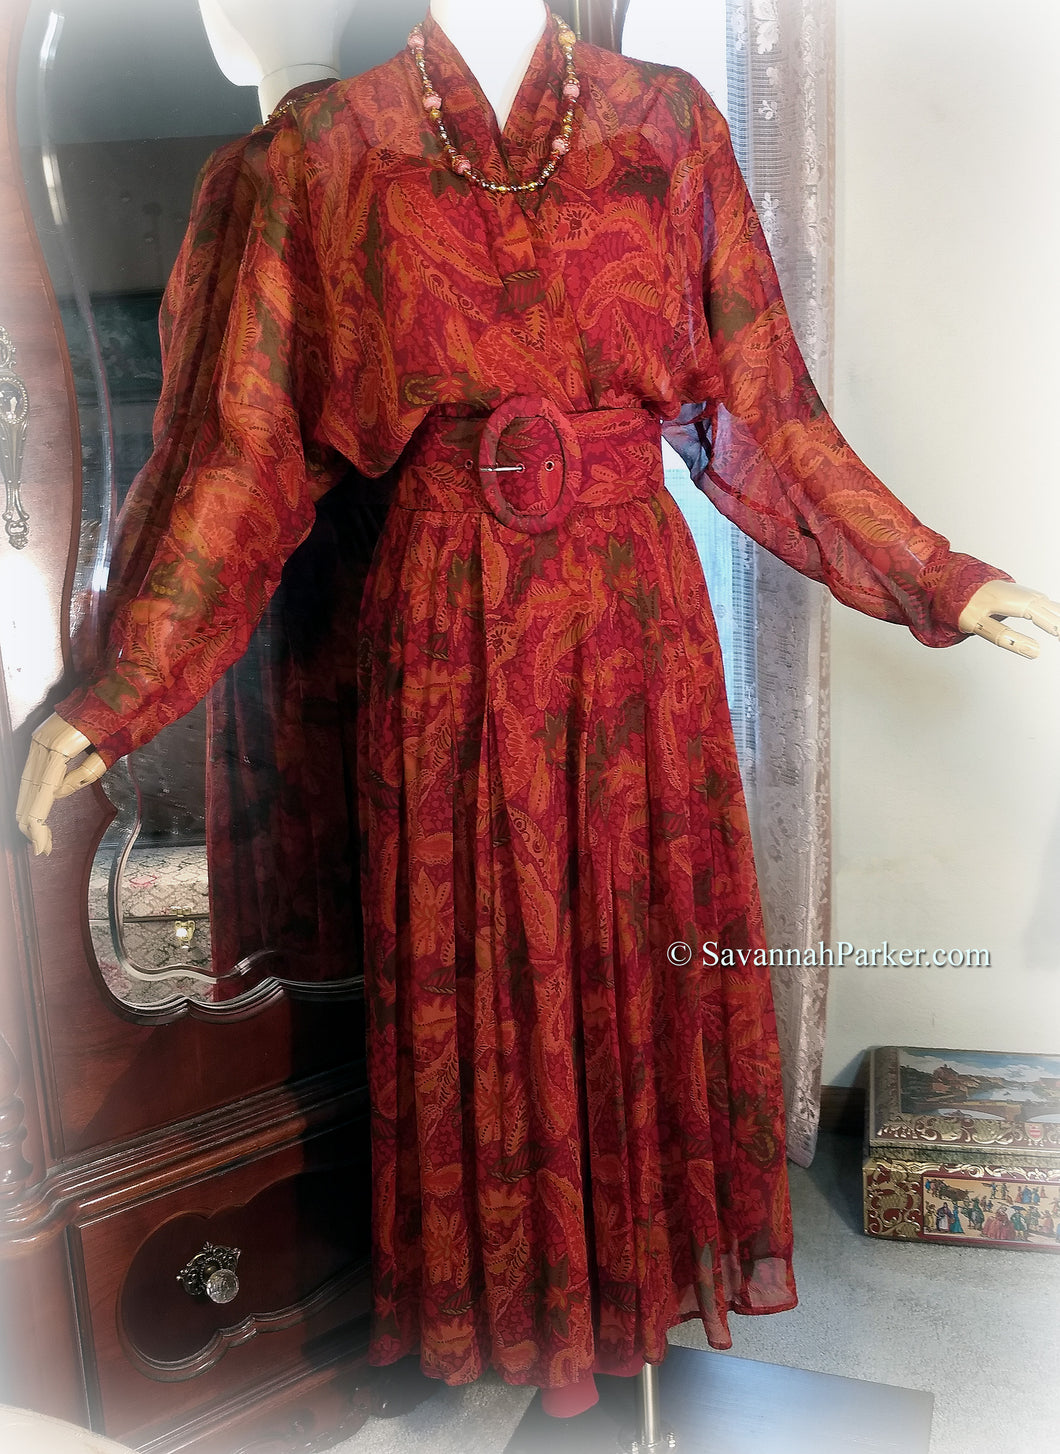 SOLD Superb Vintage Silk Chiffon 1980s Boho 3 pc Print Full Skirt Dress - Gorgeous Ruby Red/Flame Autumnal Print - Separate Slip - Matching Belt